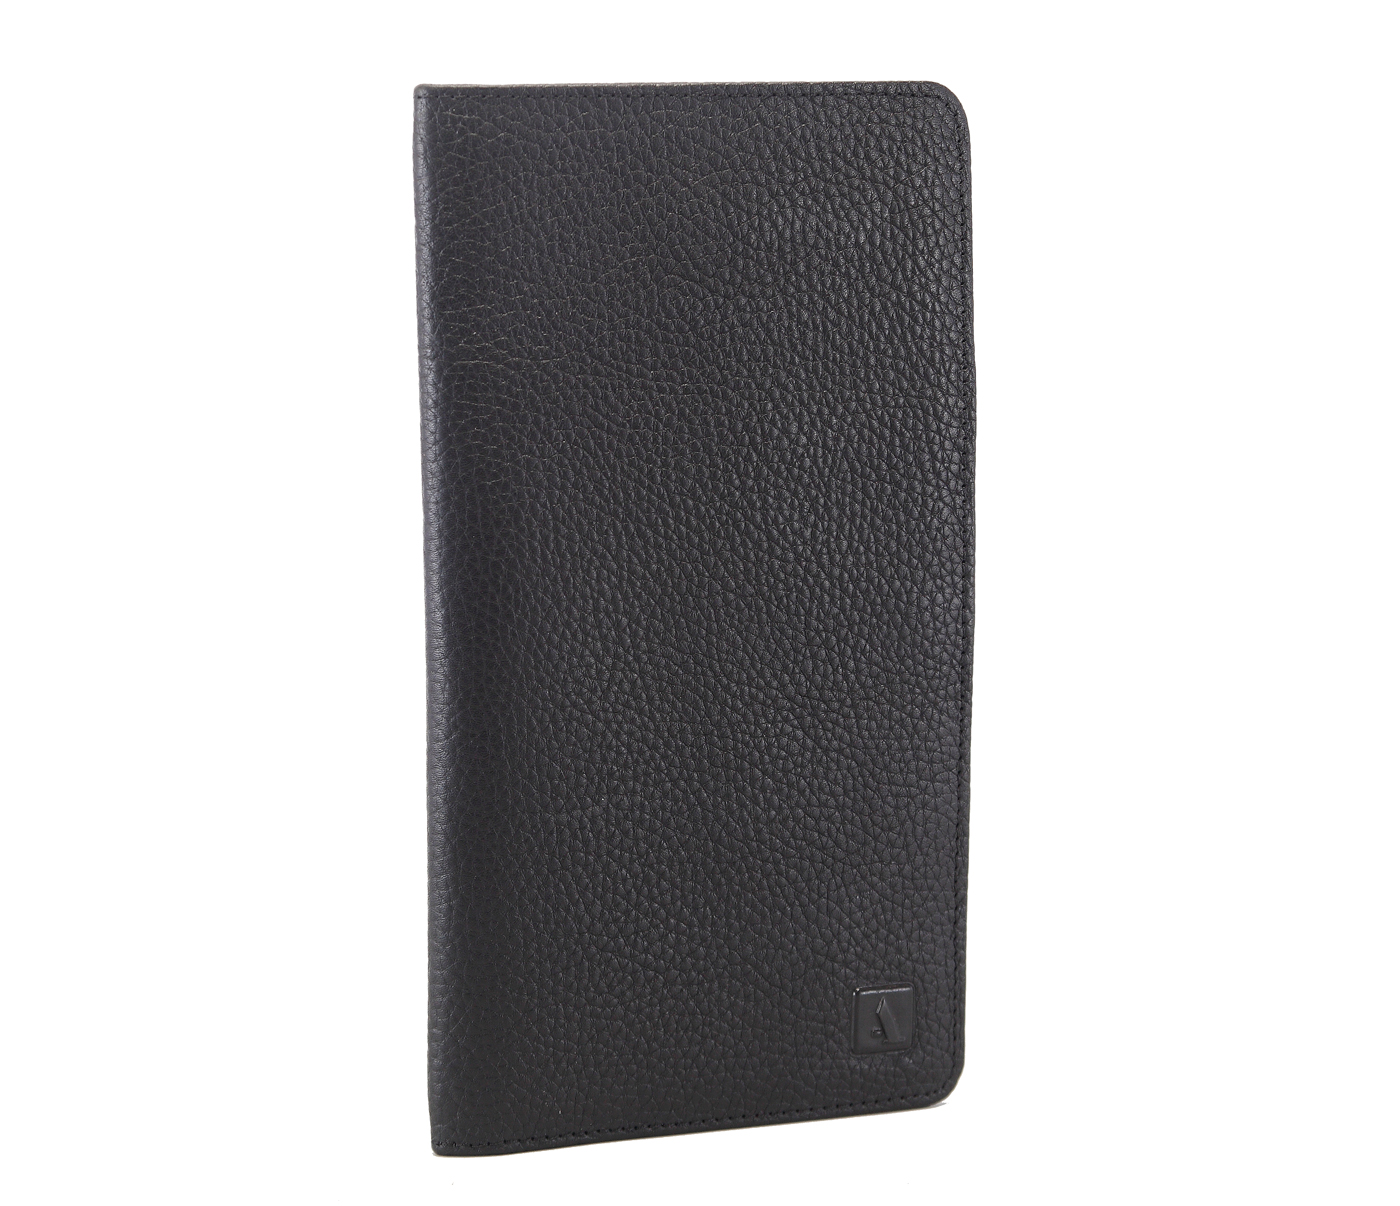 W85-Rafel -Travel document wallet in Genuine Leather - Black